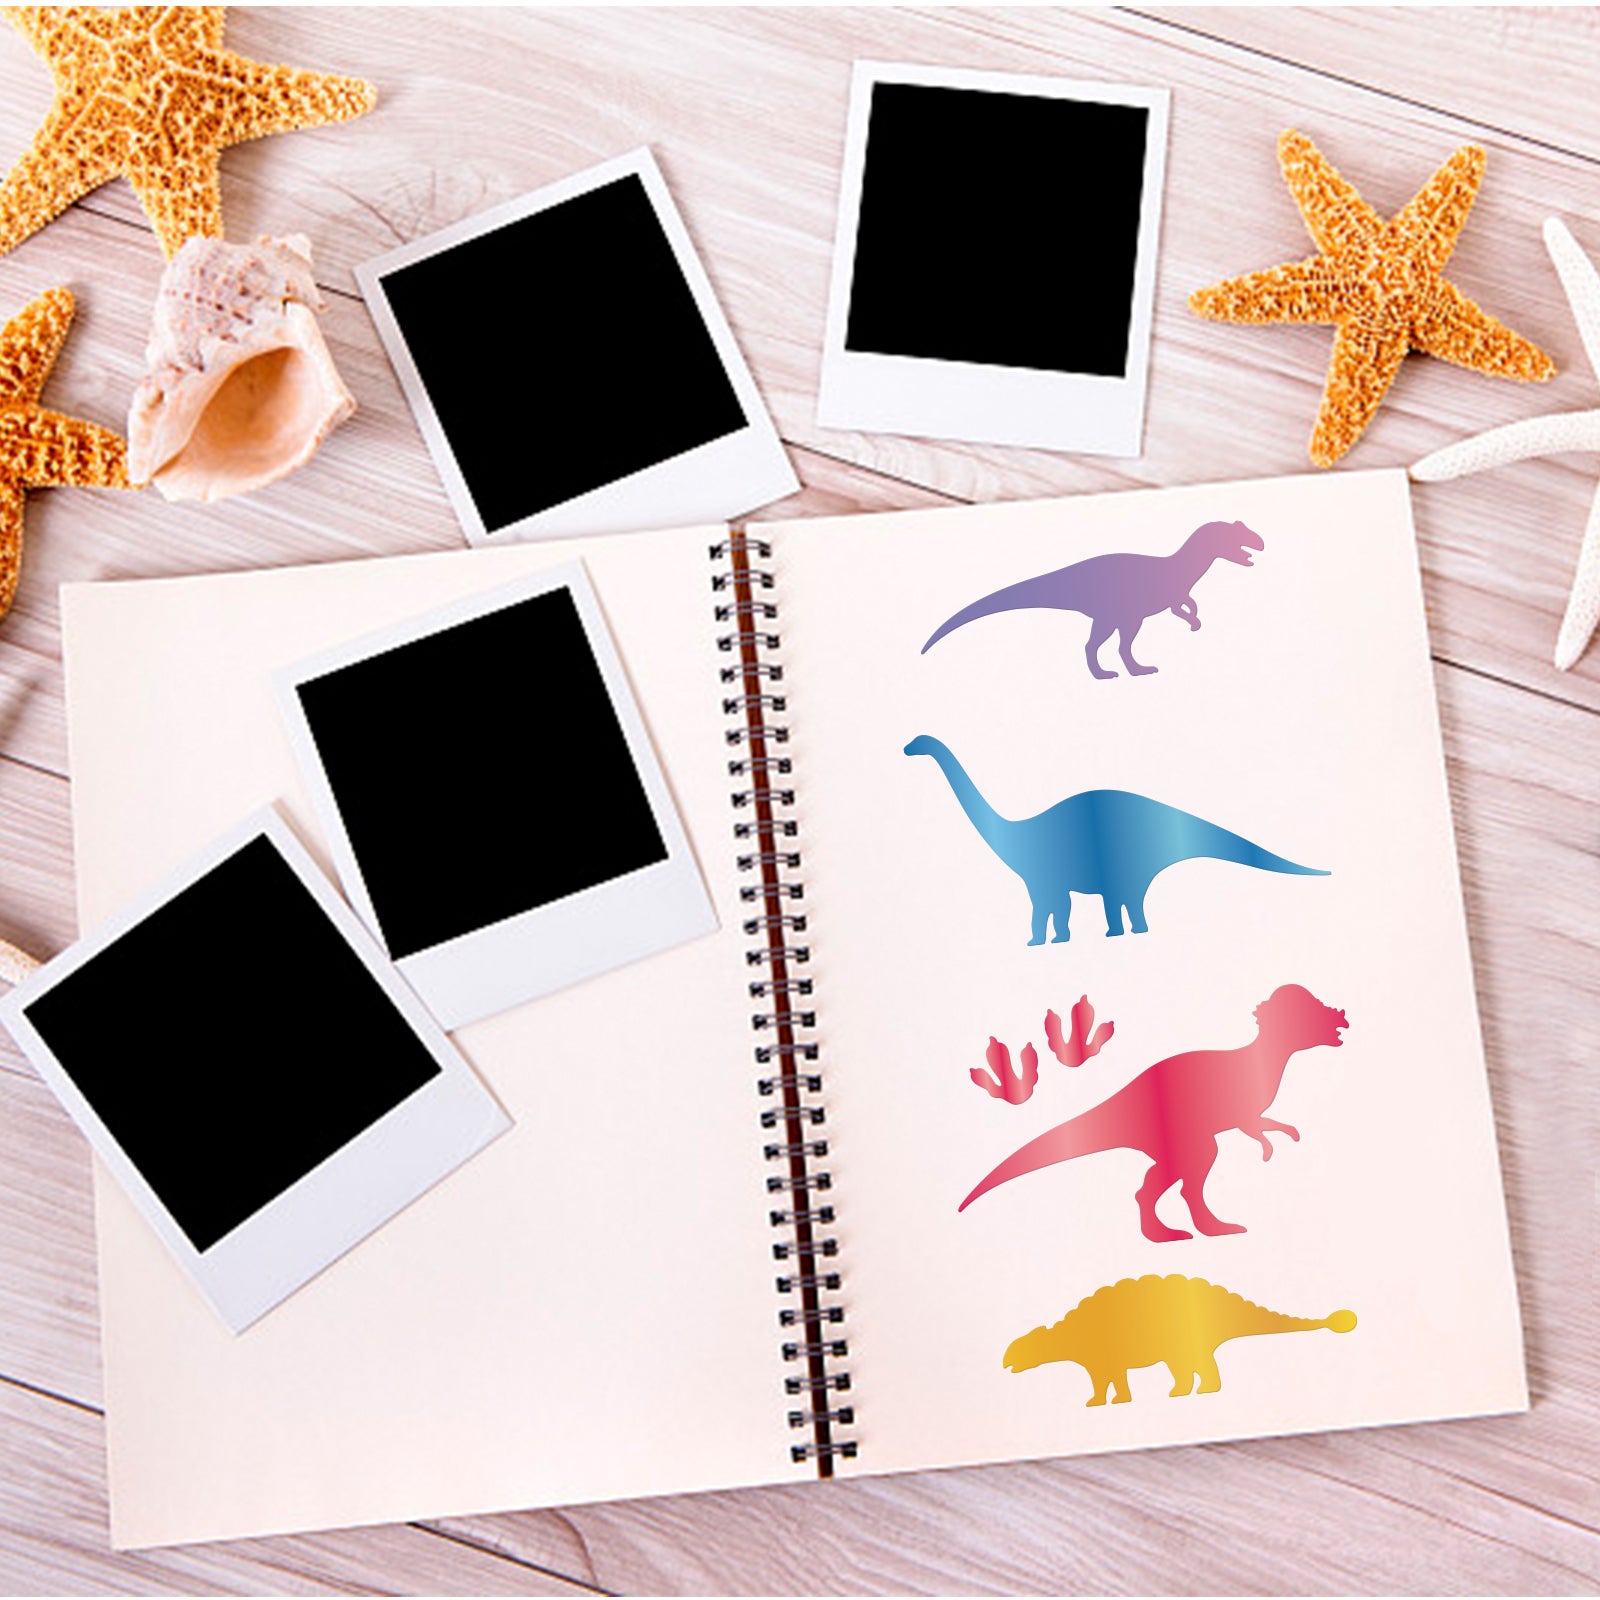 Globleland Hot Foil Plate, for DIY Scrapbooking, Photo Album Decorative, Cards Making, Stamp Sheets, Dinosaur Theme Patterns